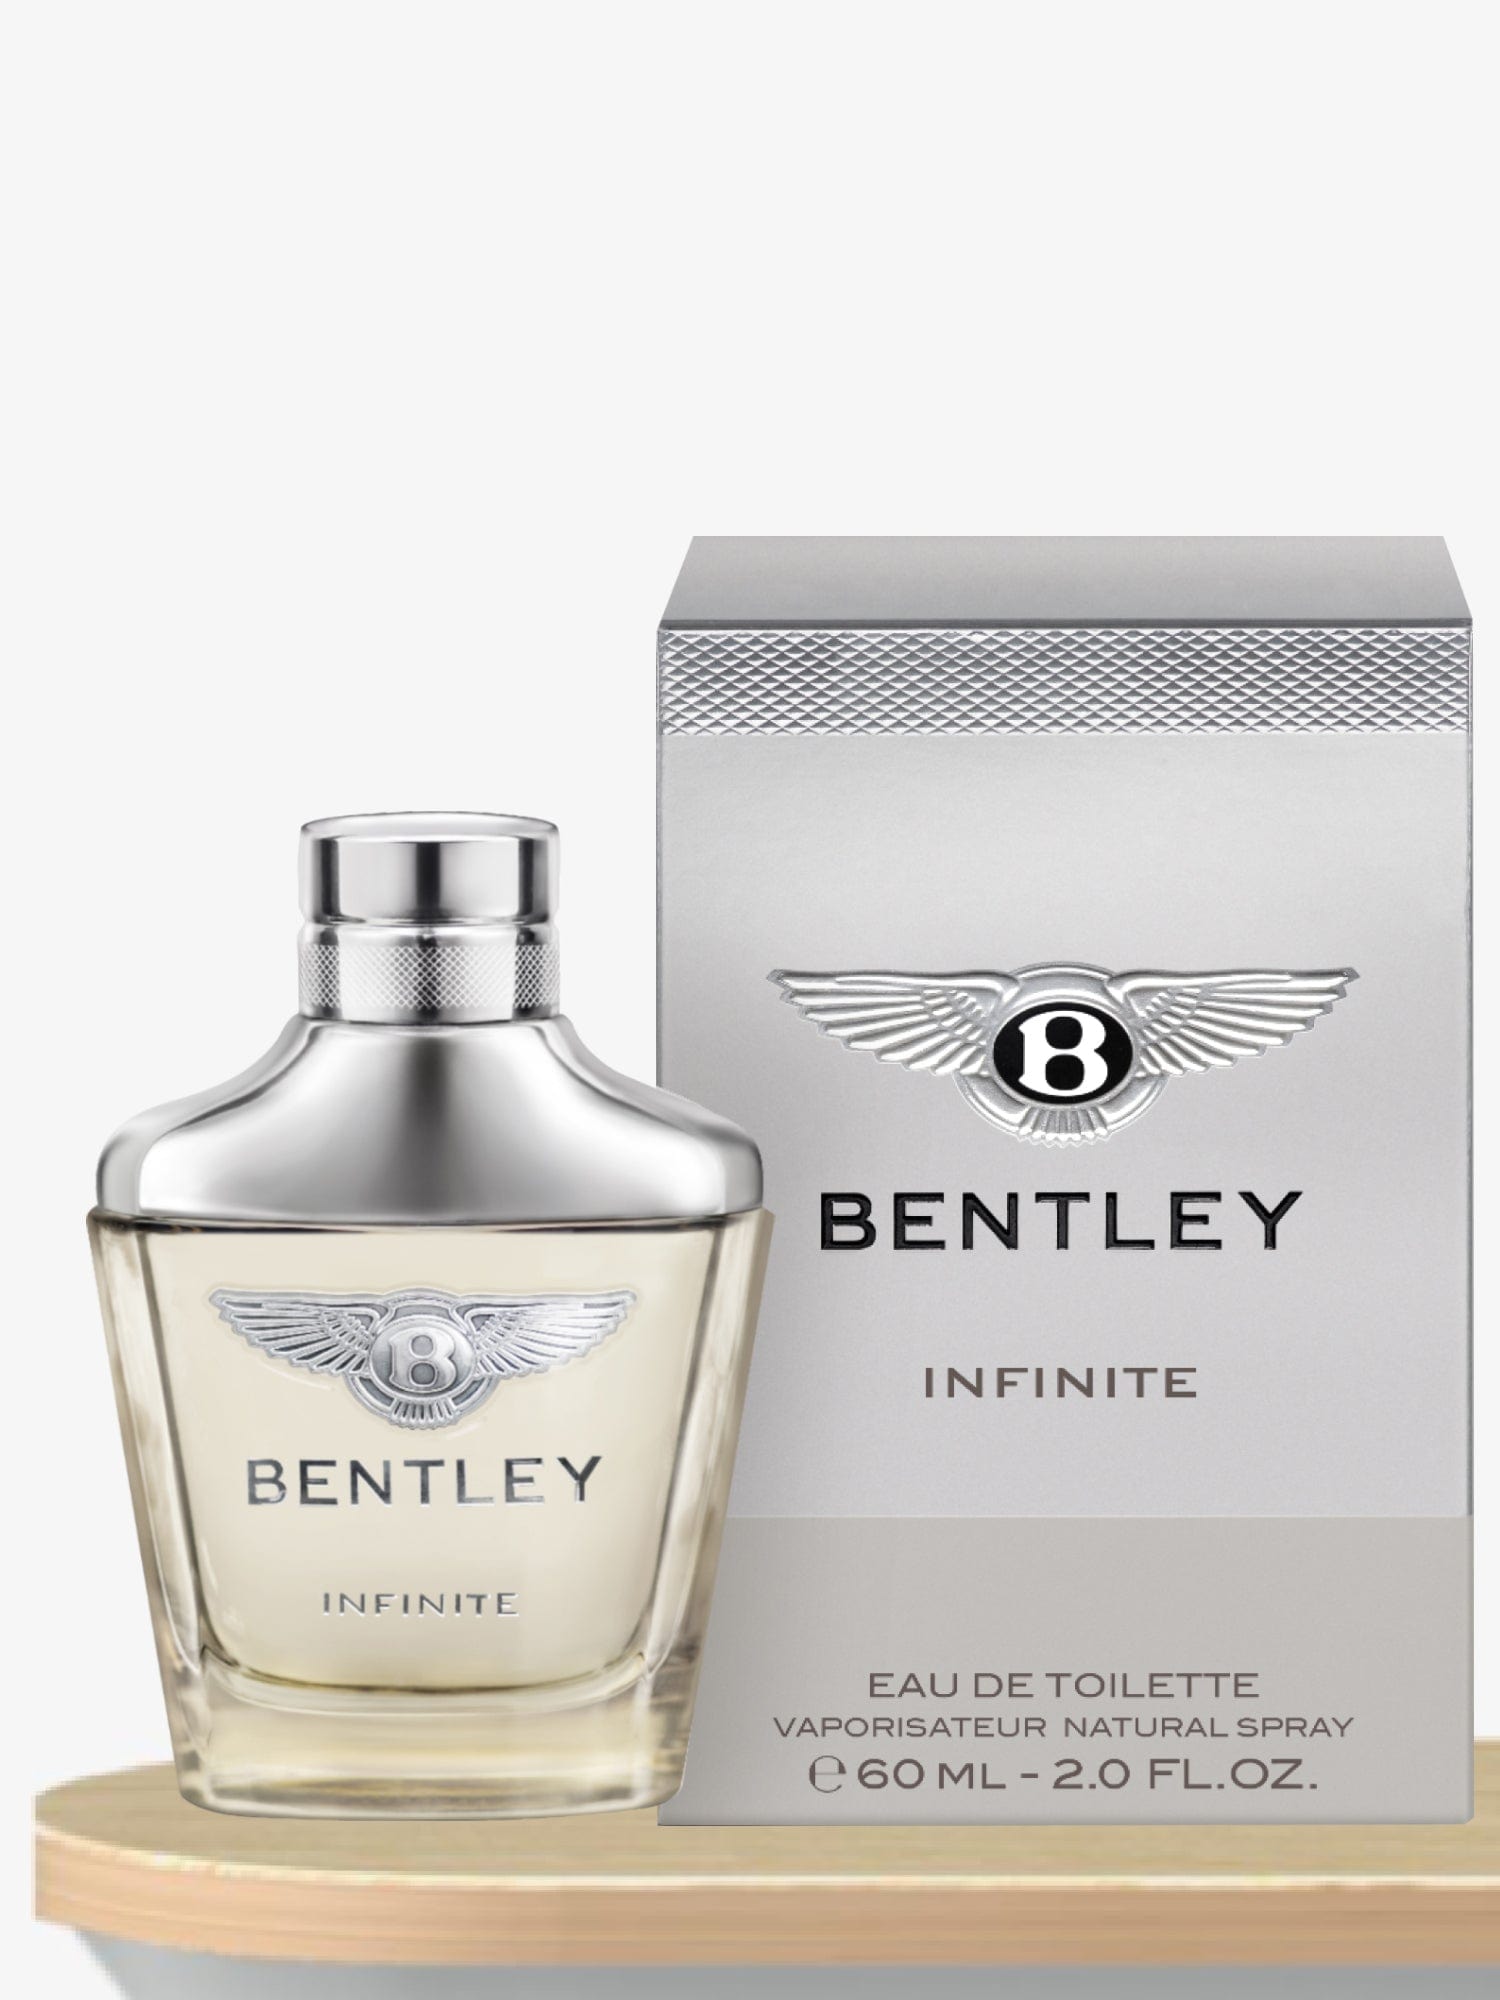 Bentley Infinite Intense Eau de Parfum 100 mL / Male